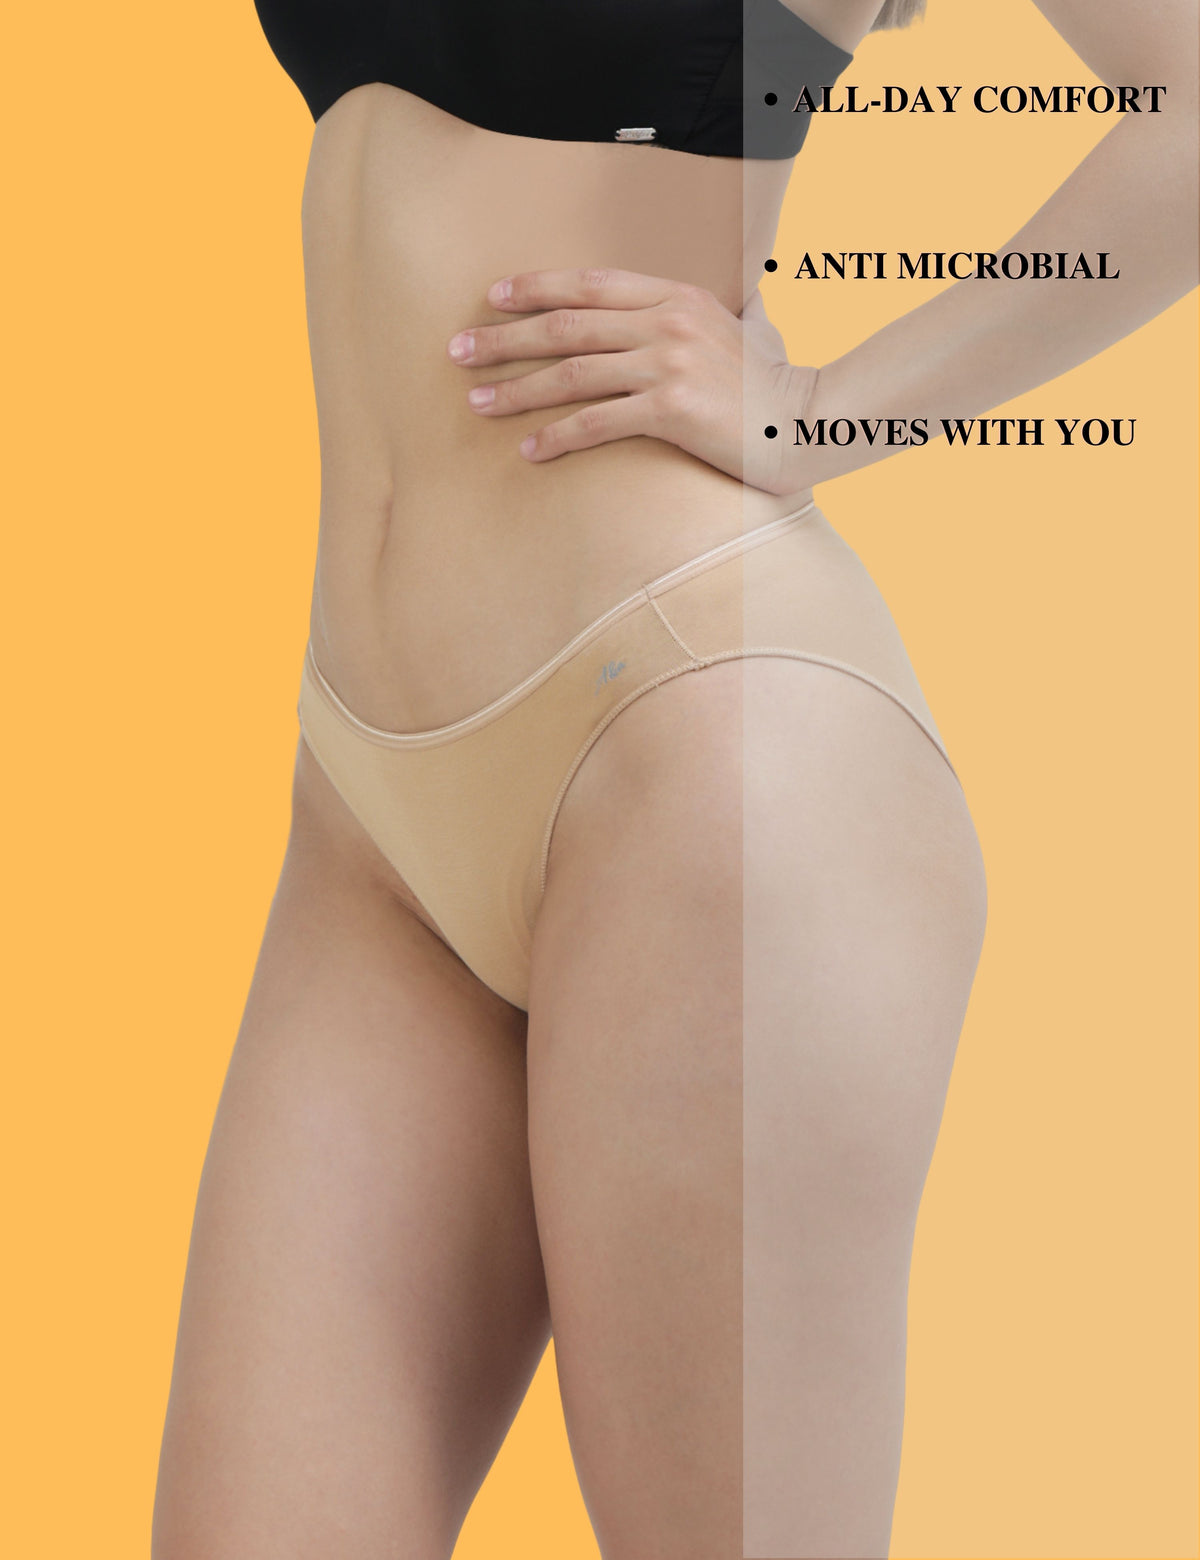 AshleyandAlvis Bamboo Micro Modal  antibacterial -Bikini panties (MG-AN-SR) (pack of 3)